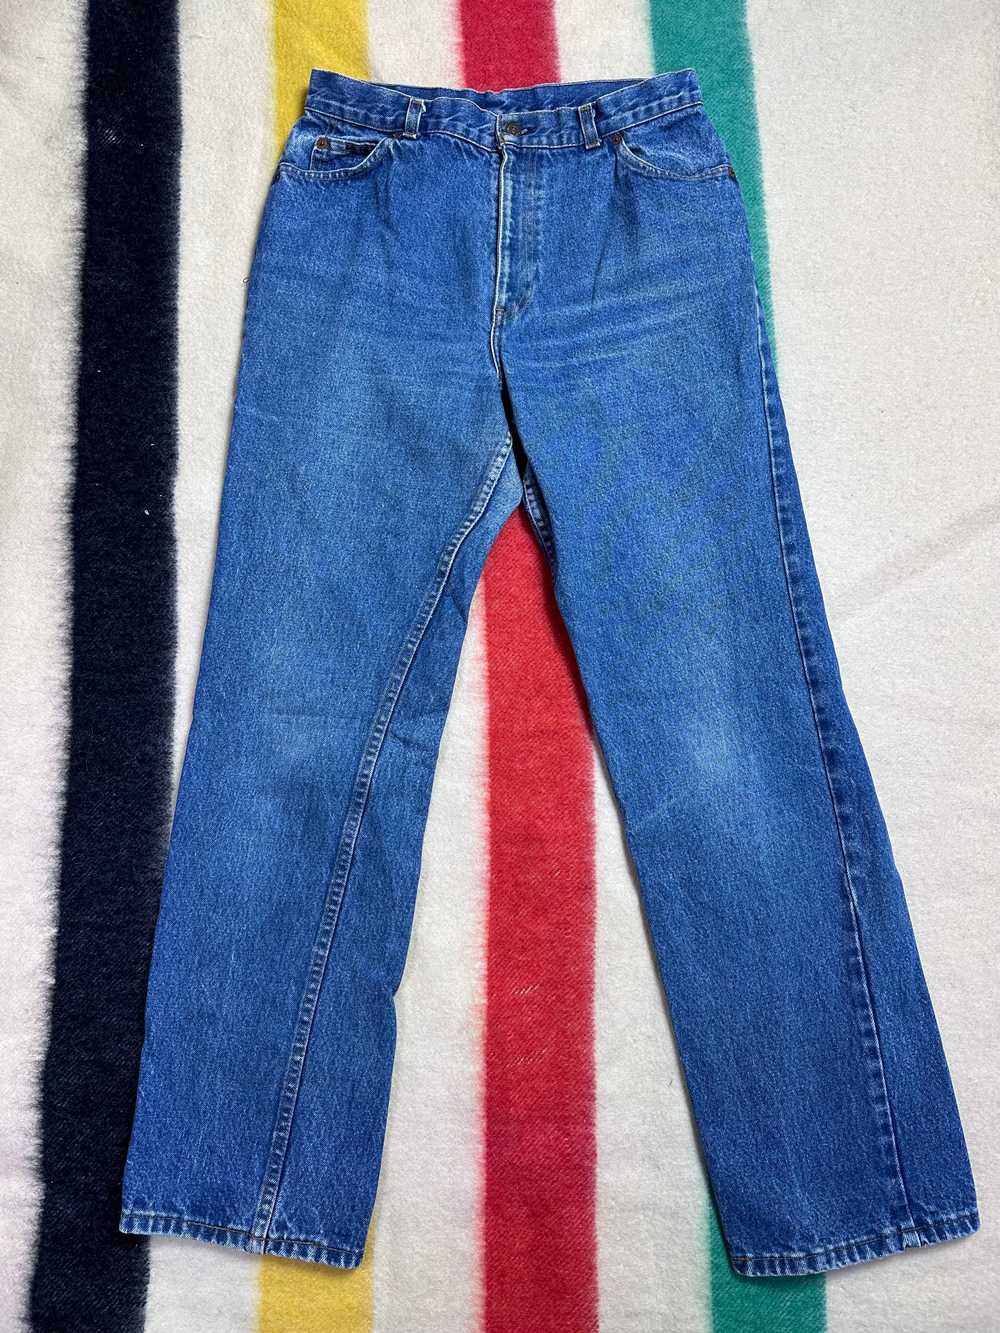 1970s/1980s Levi’s Jeans, 30"x31.5", White Patch - image 2